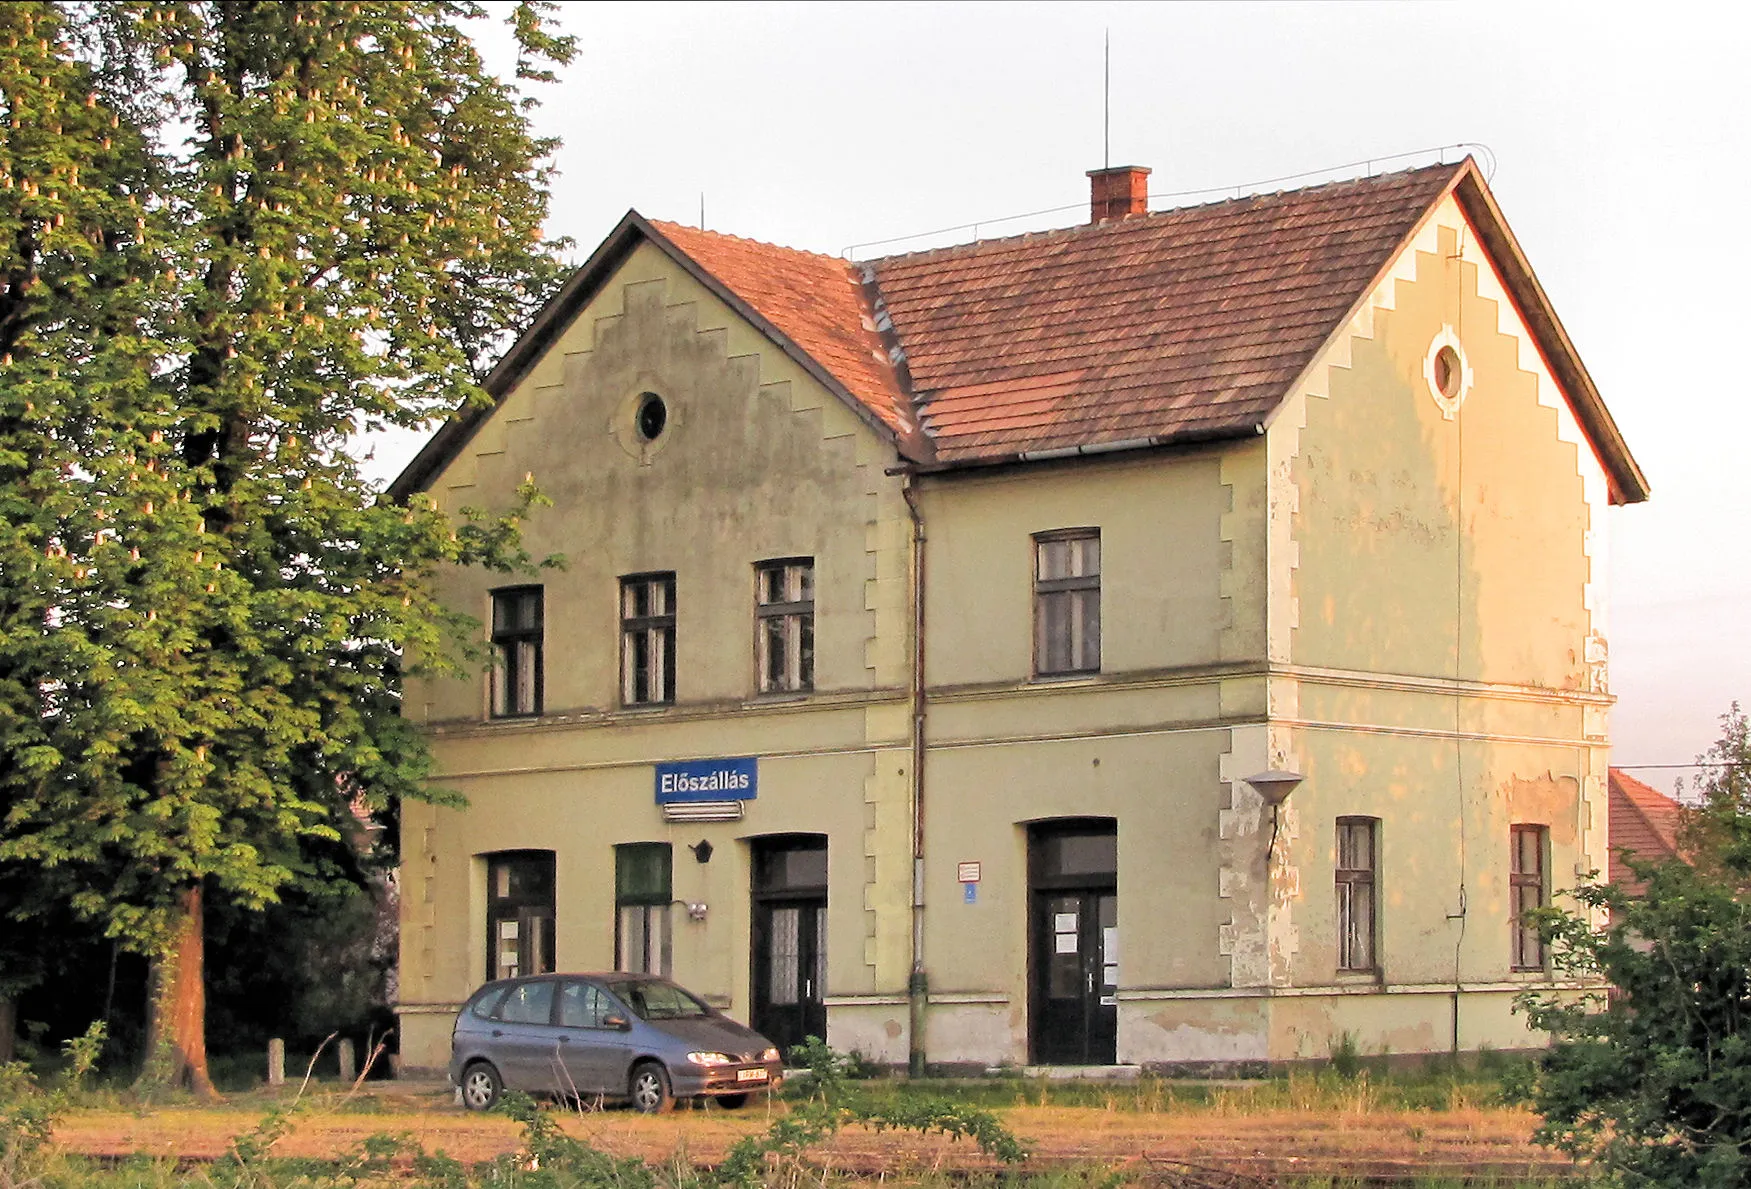 Photo showing: Train station, Előszállás, Hungary. Built in 1896.